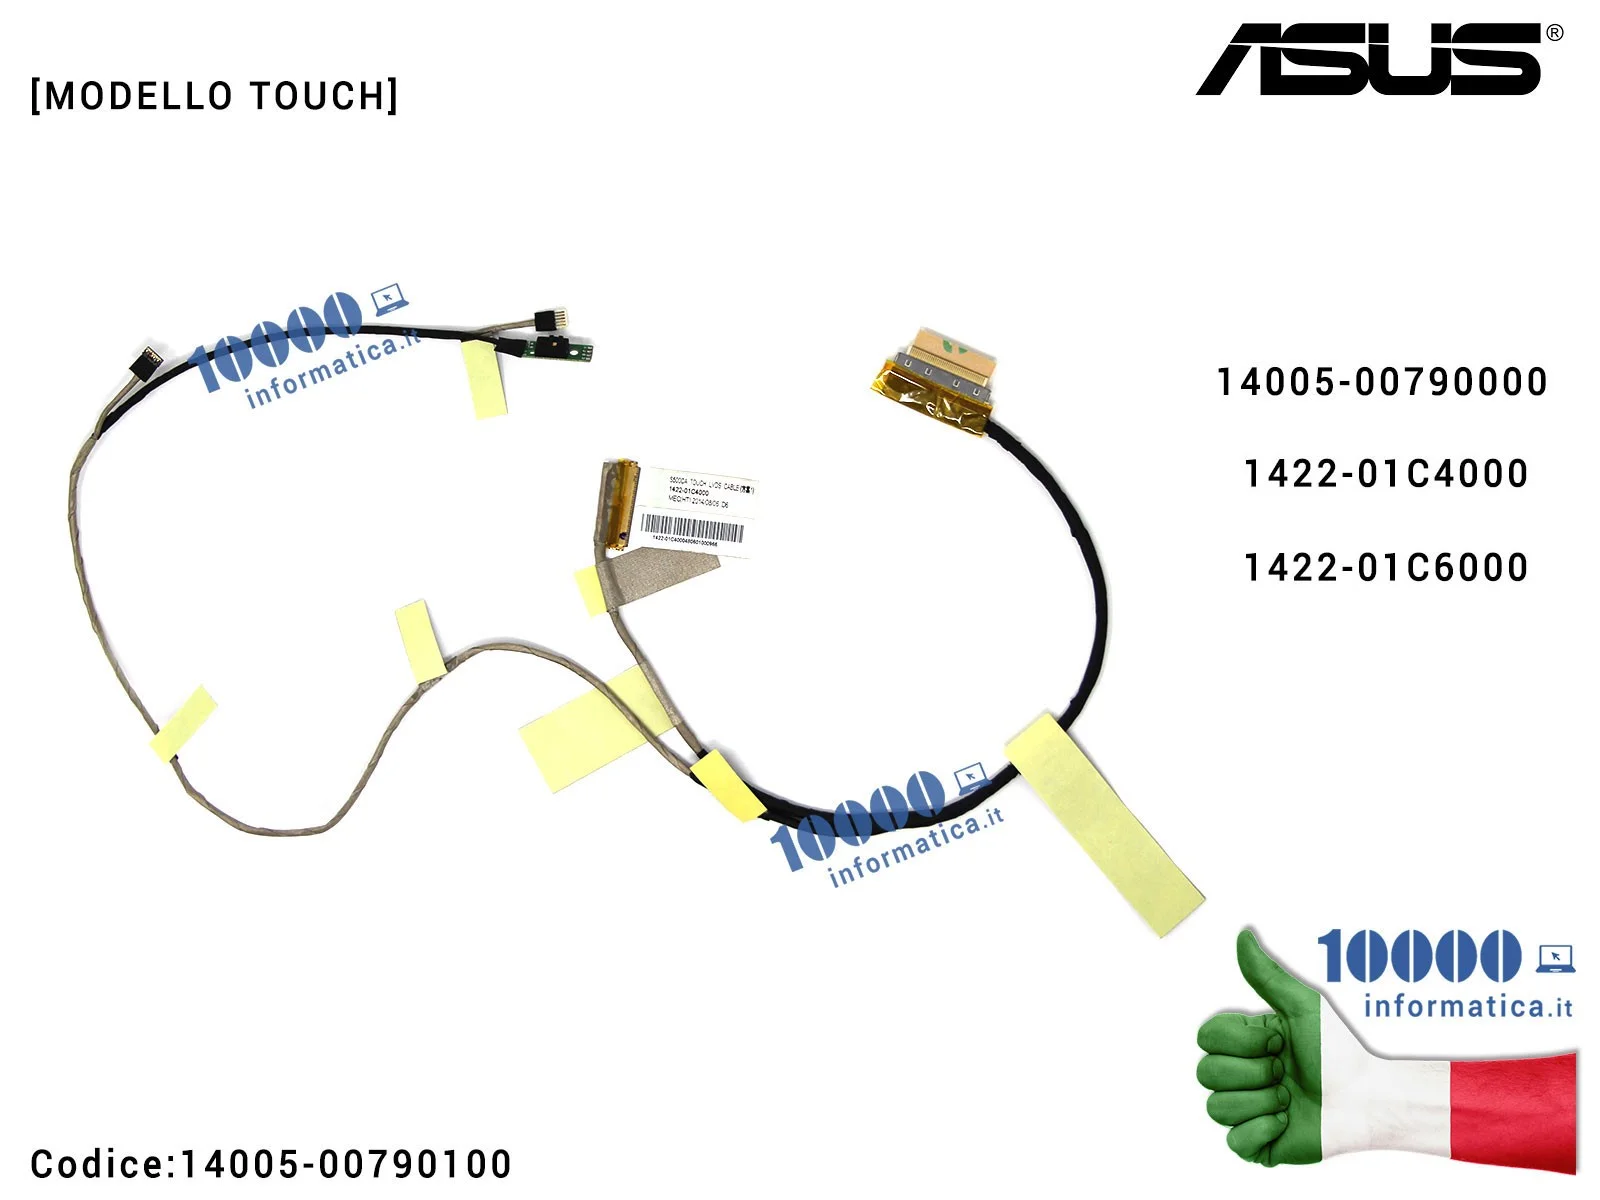 14005-00790100 Cavo Flat LCD ASUS VivoBook S500CA S500C [MODELLO TOUCH] 1422-01C4000 1422-01C6000 14005-00790000